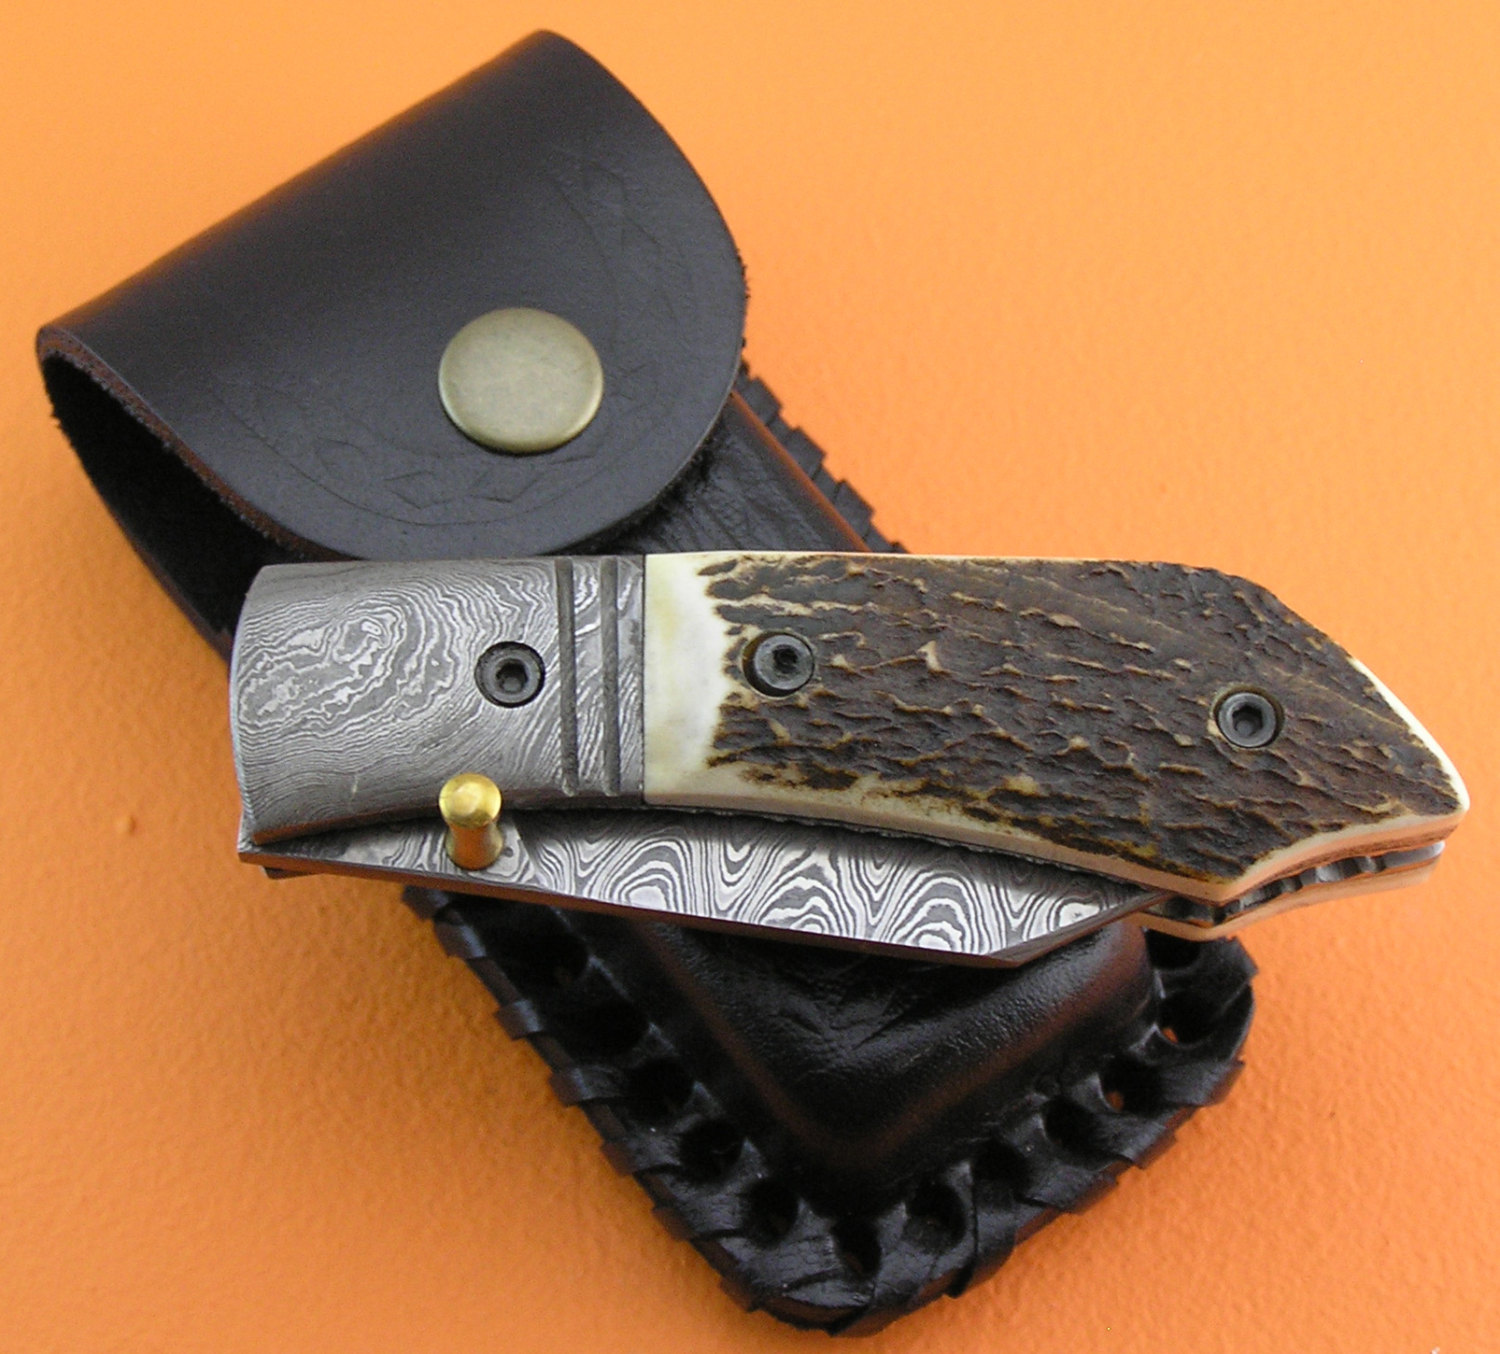 7 Handmade Forged Damascus Pocket Folding Knife - Stag Antler Handle